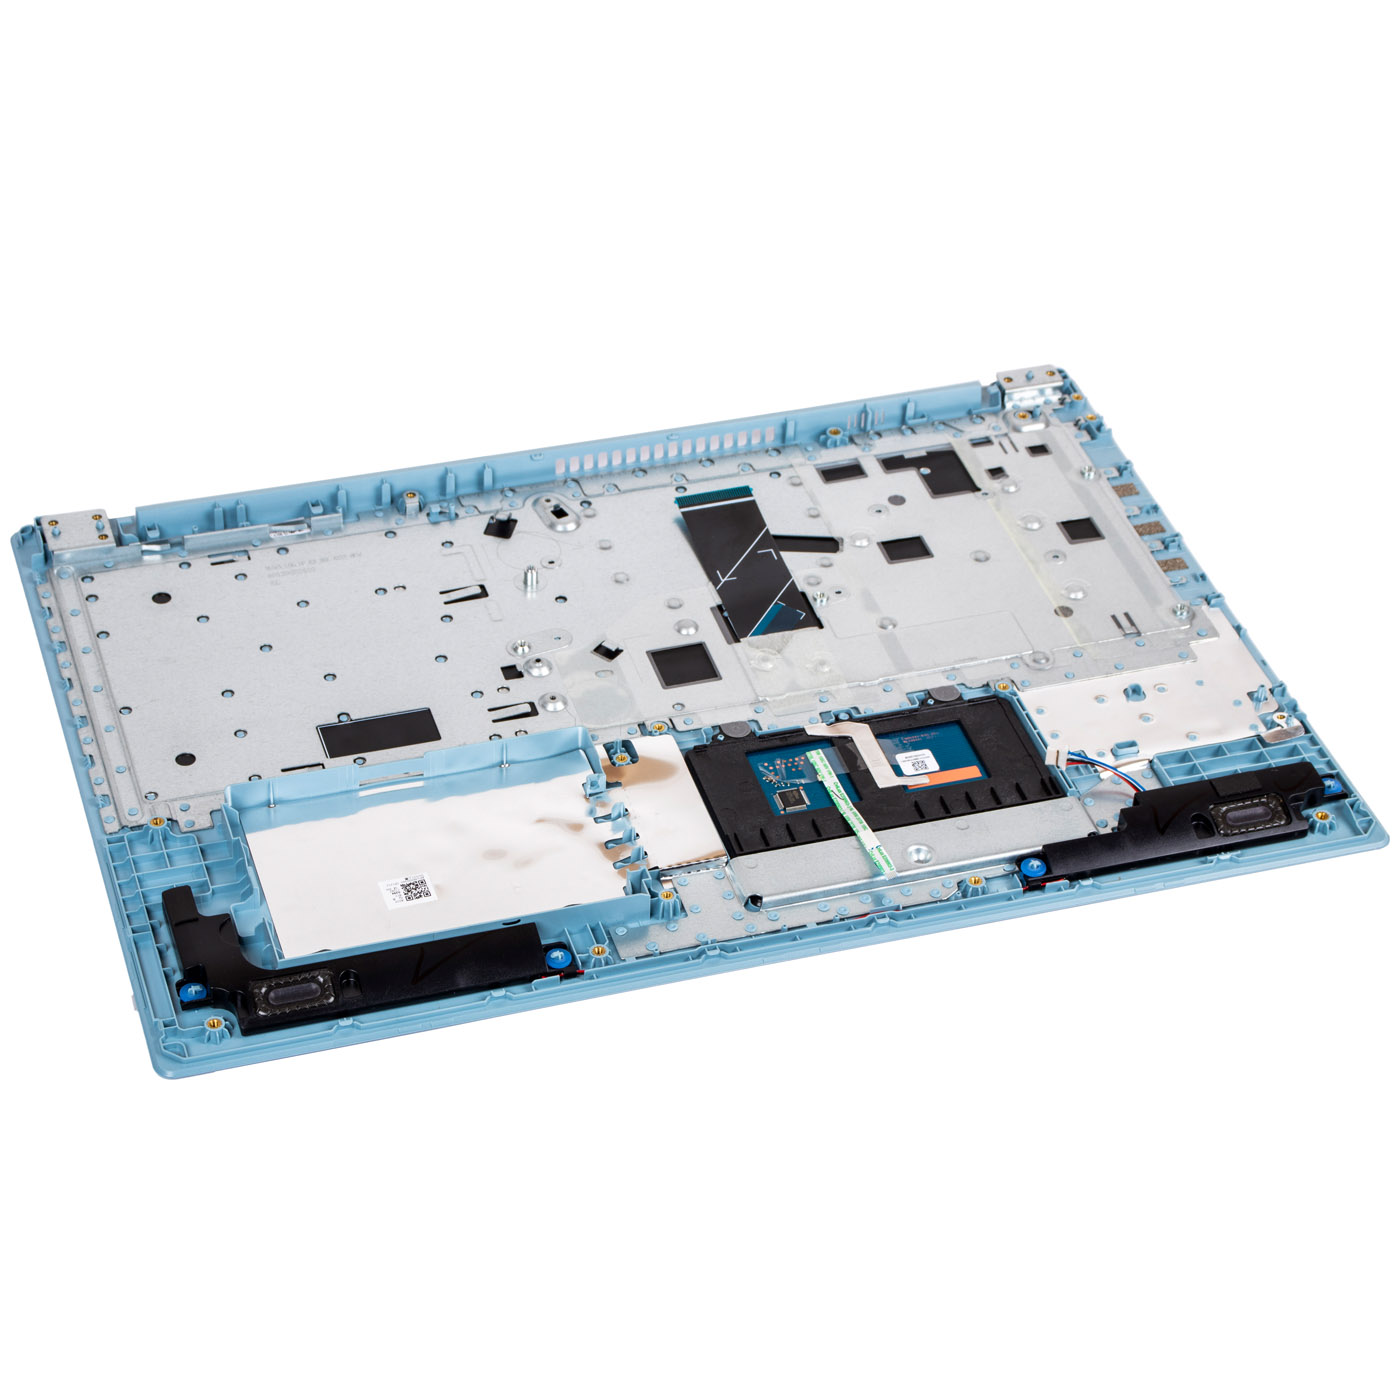 Palmrest klawiatura Lenovo IdeaPad 320 330 15 niebieski 